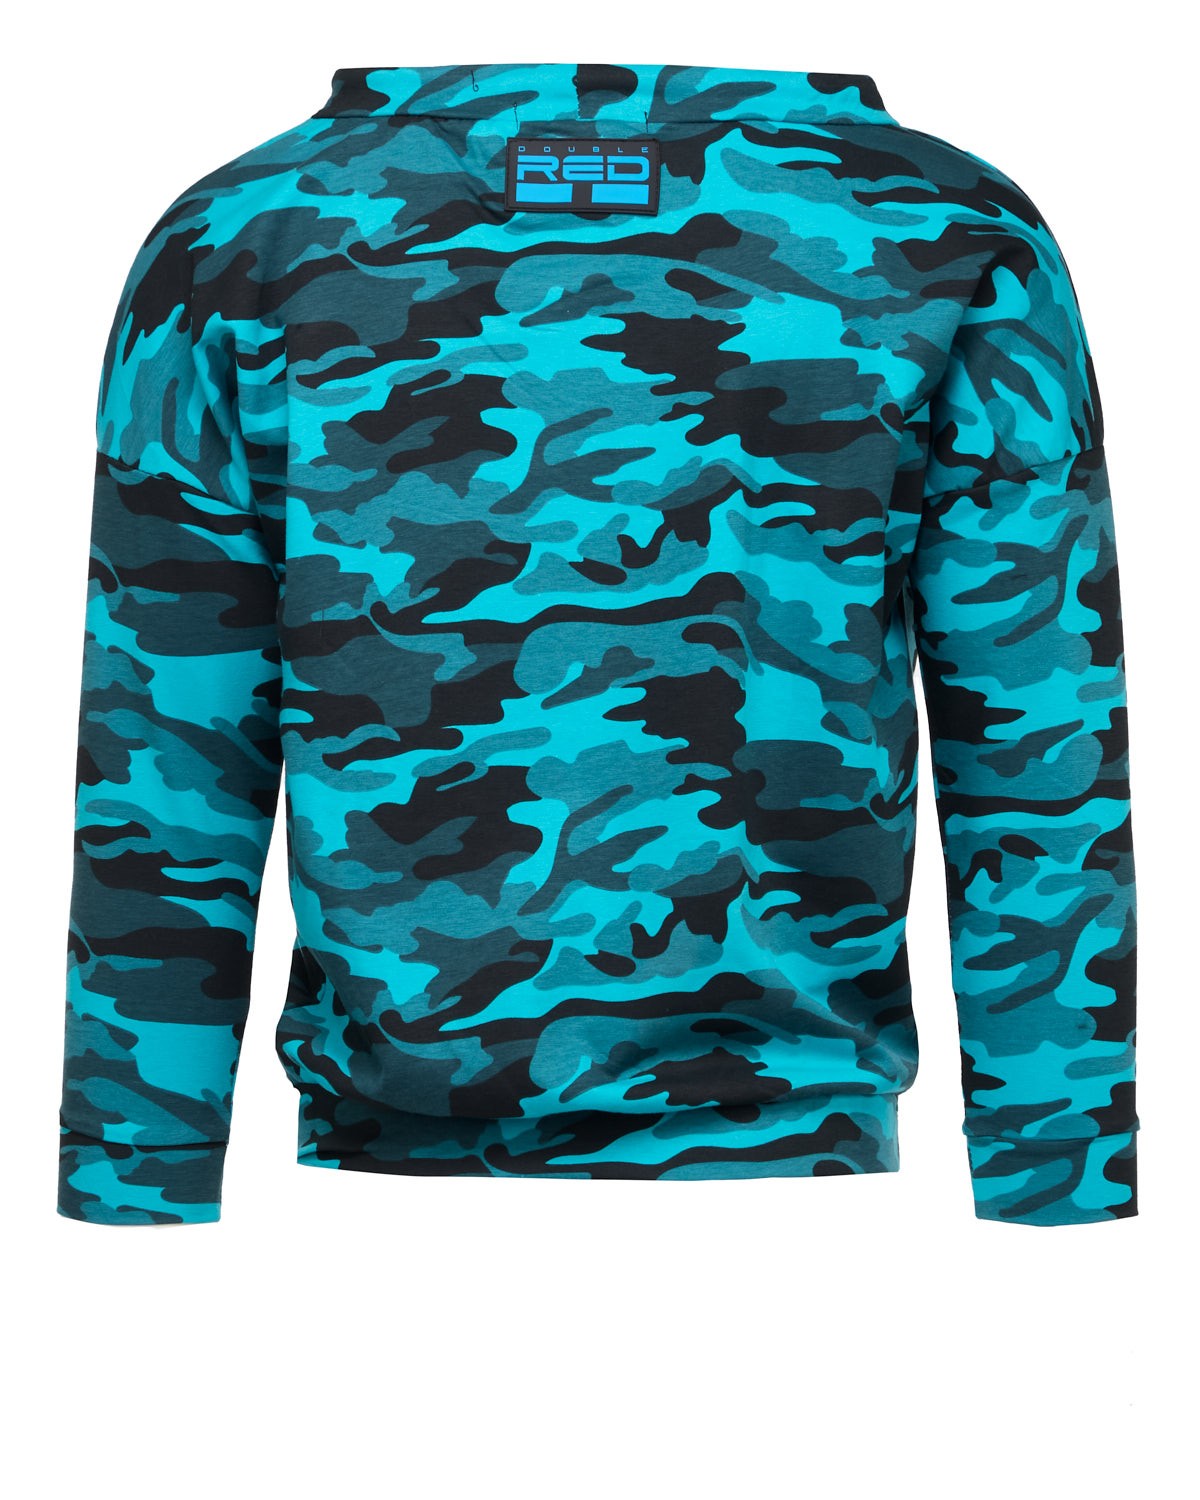 Sweatshirt Neon Streets Collection Camo Blue Turquoise